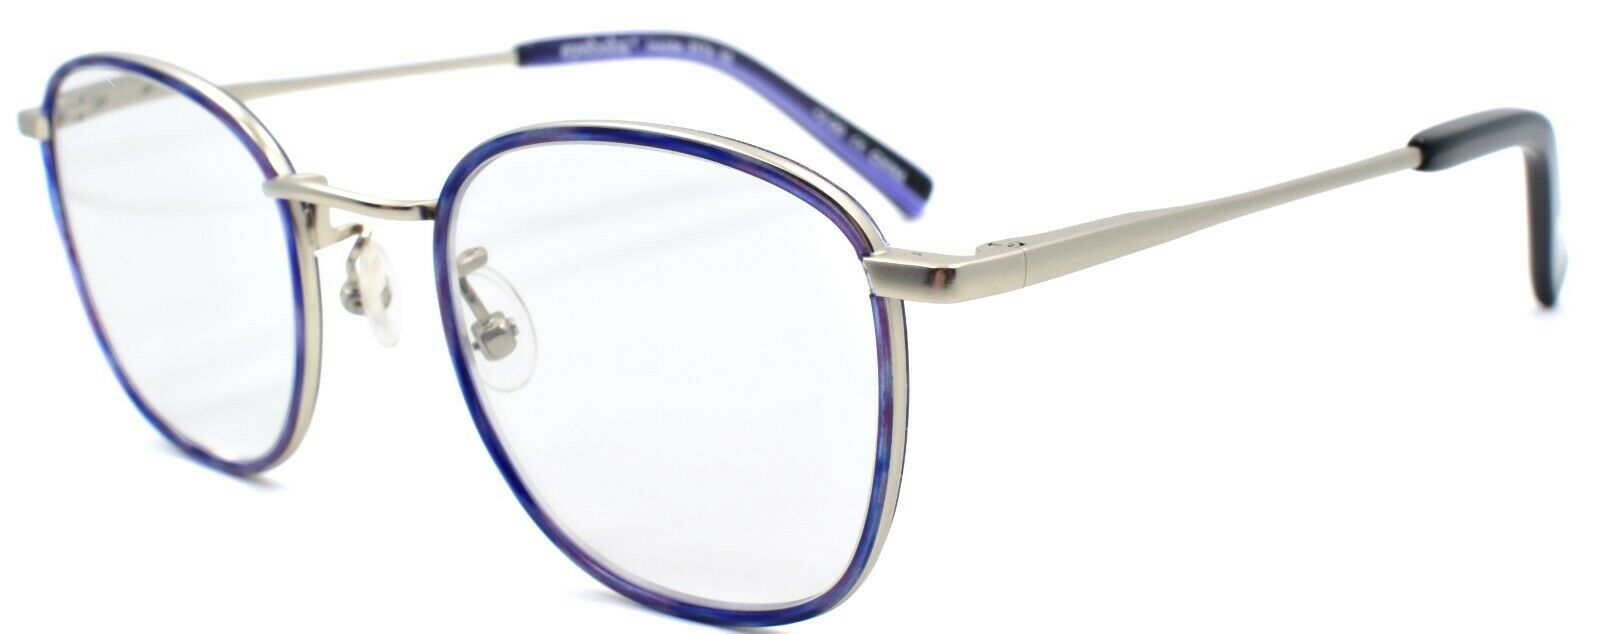 1-Eyebobs Inside 3174 10 Unisex Reading Glasses Blue / Silver +1.50-842754169462-IKSpecs